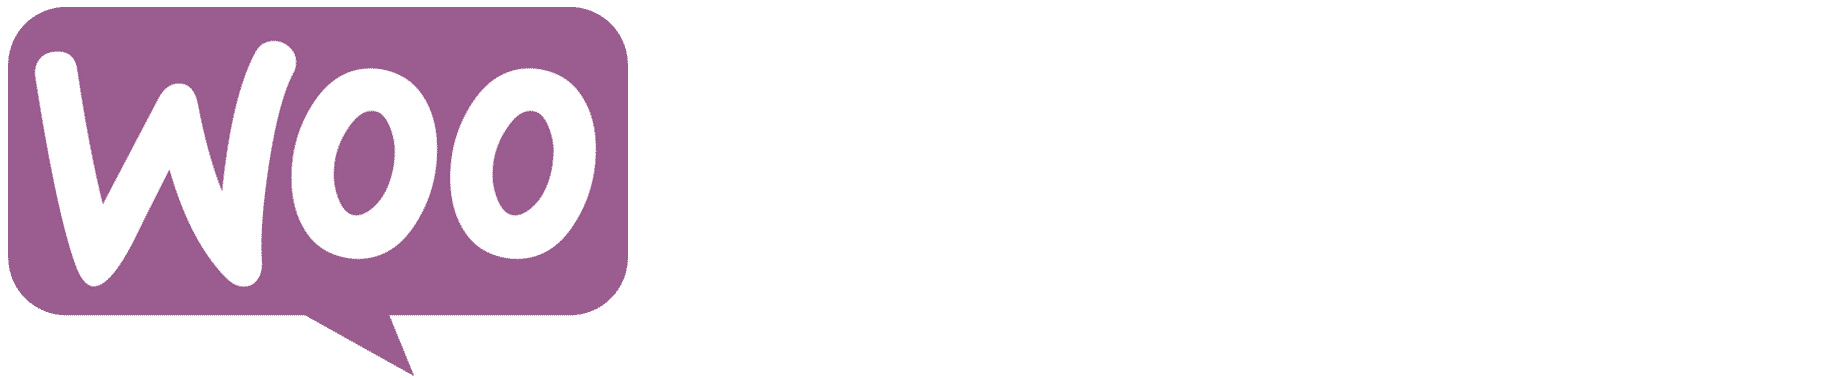 Woocommerce developers